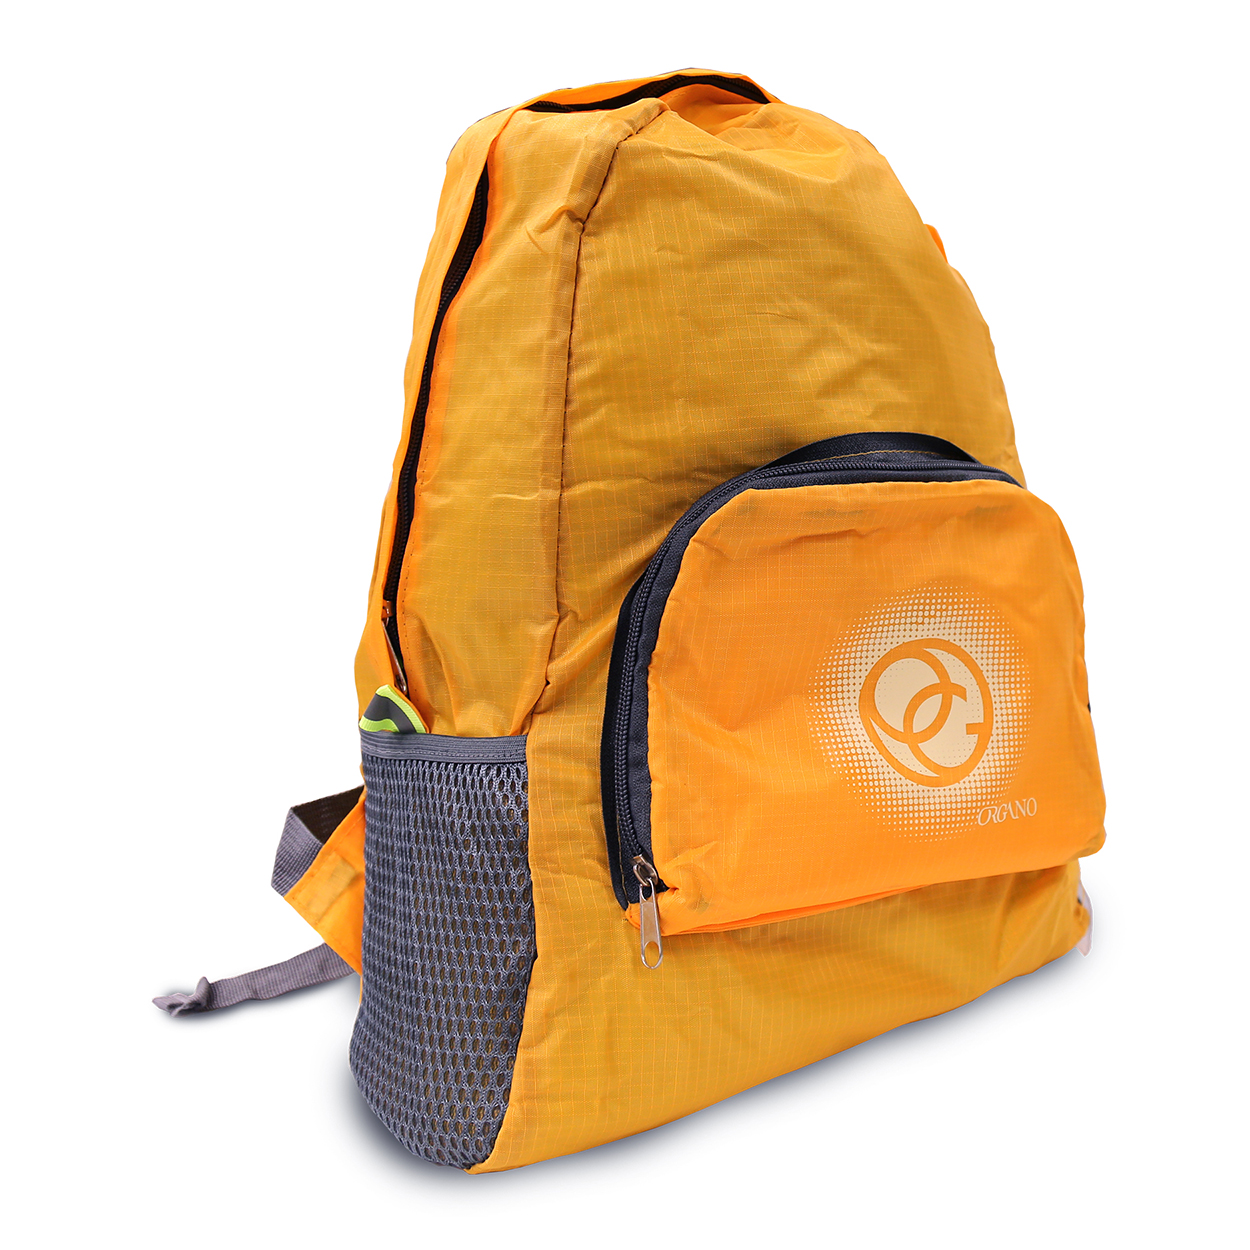 Organo Foldable Backpack